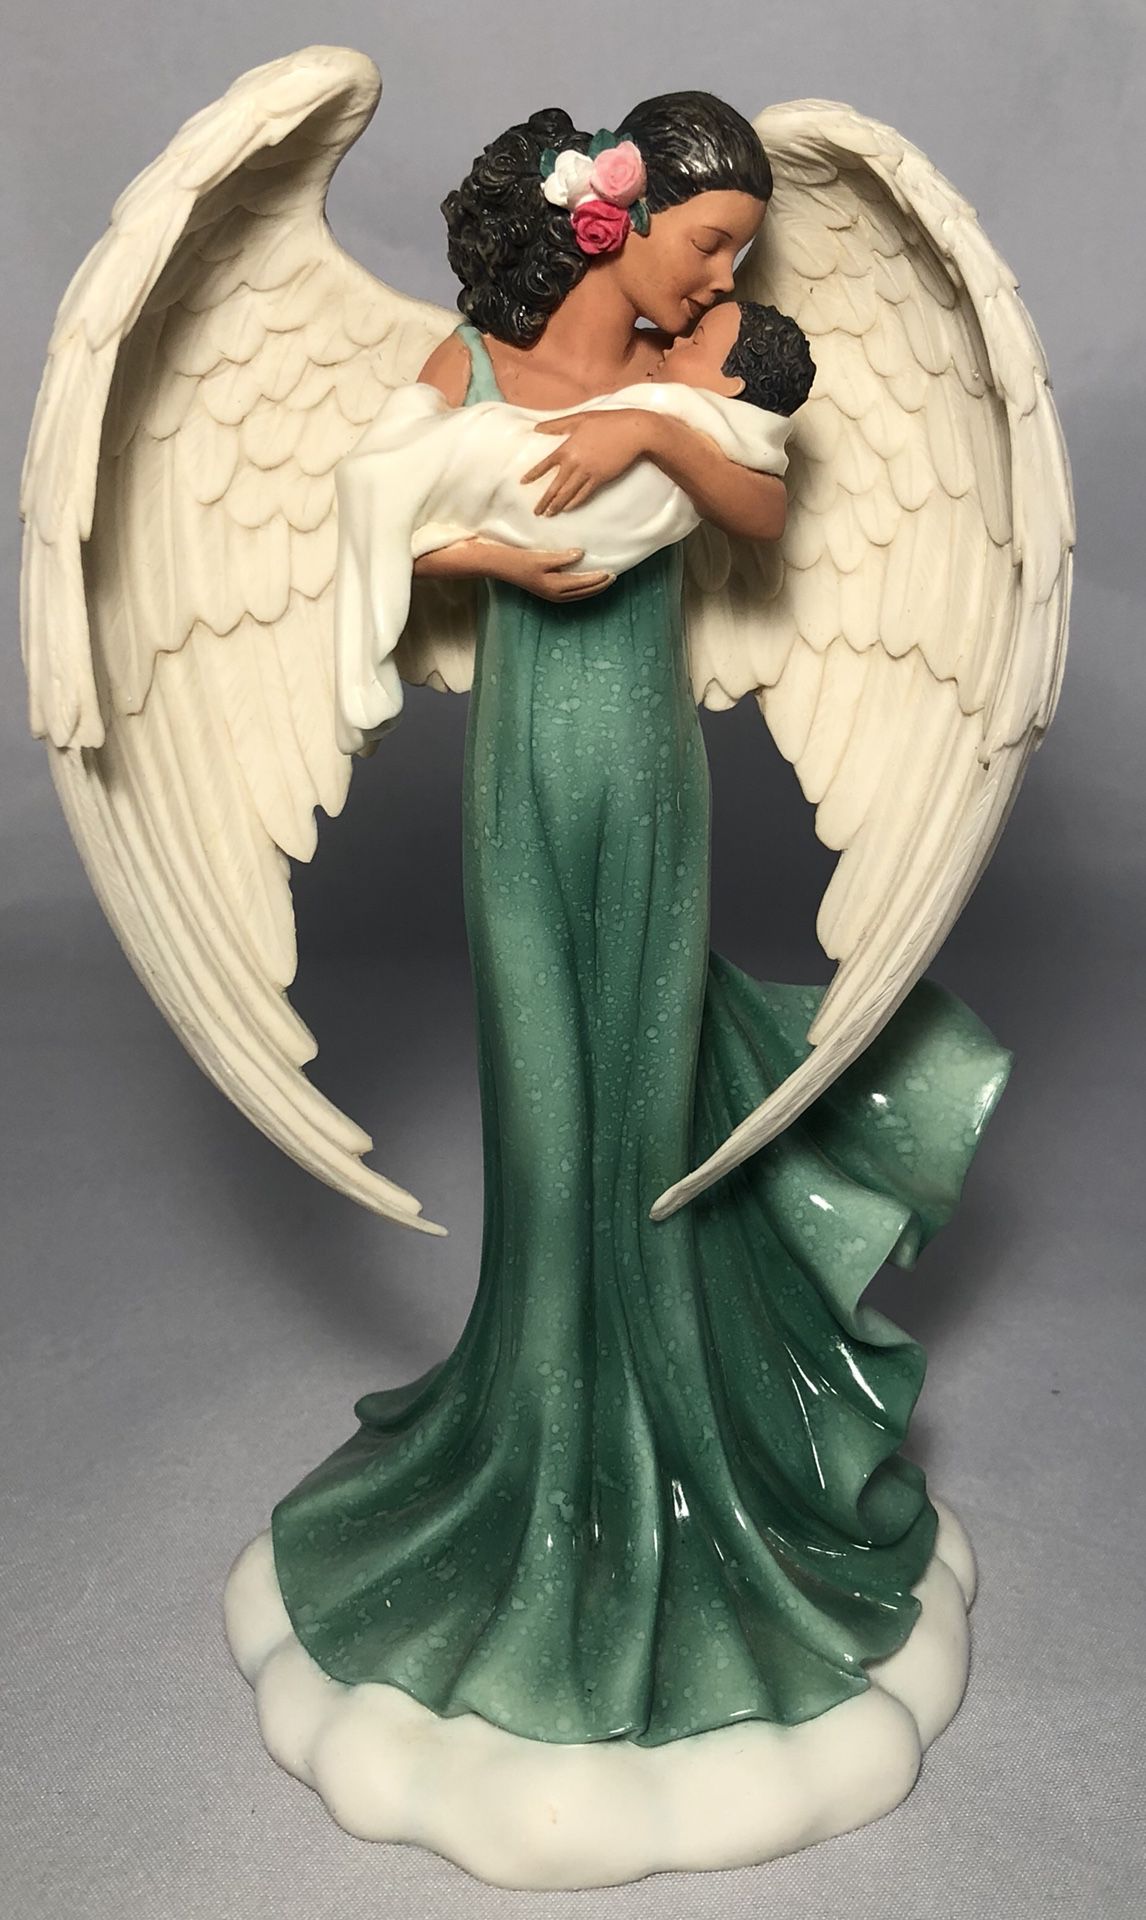 Cloud Works Angels & Company "Autumn" Angel Sculpture in Original Box